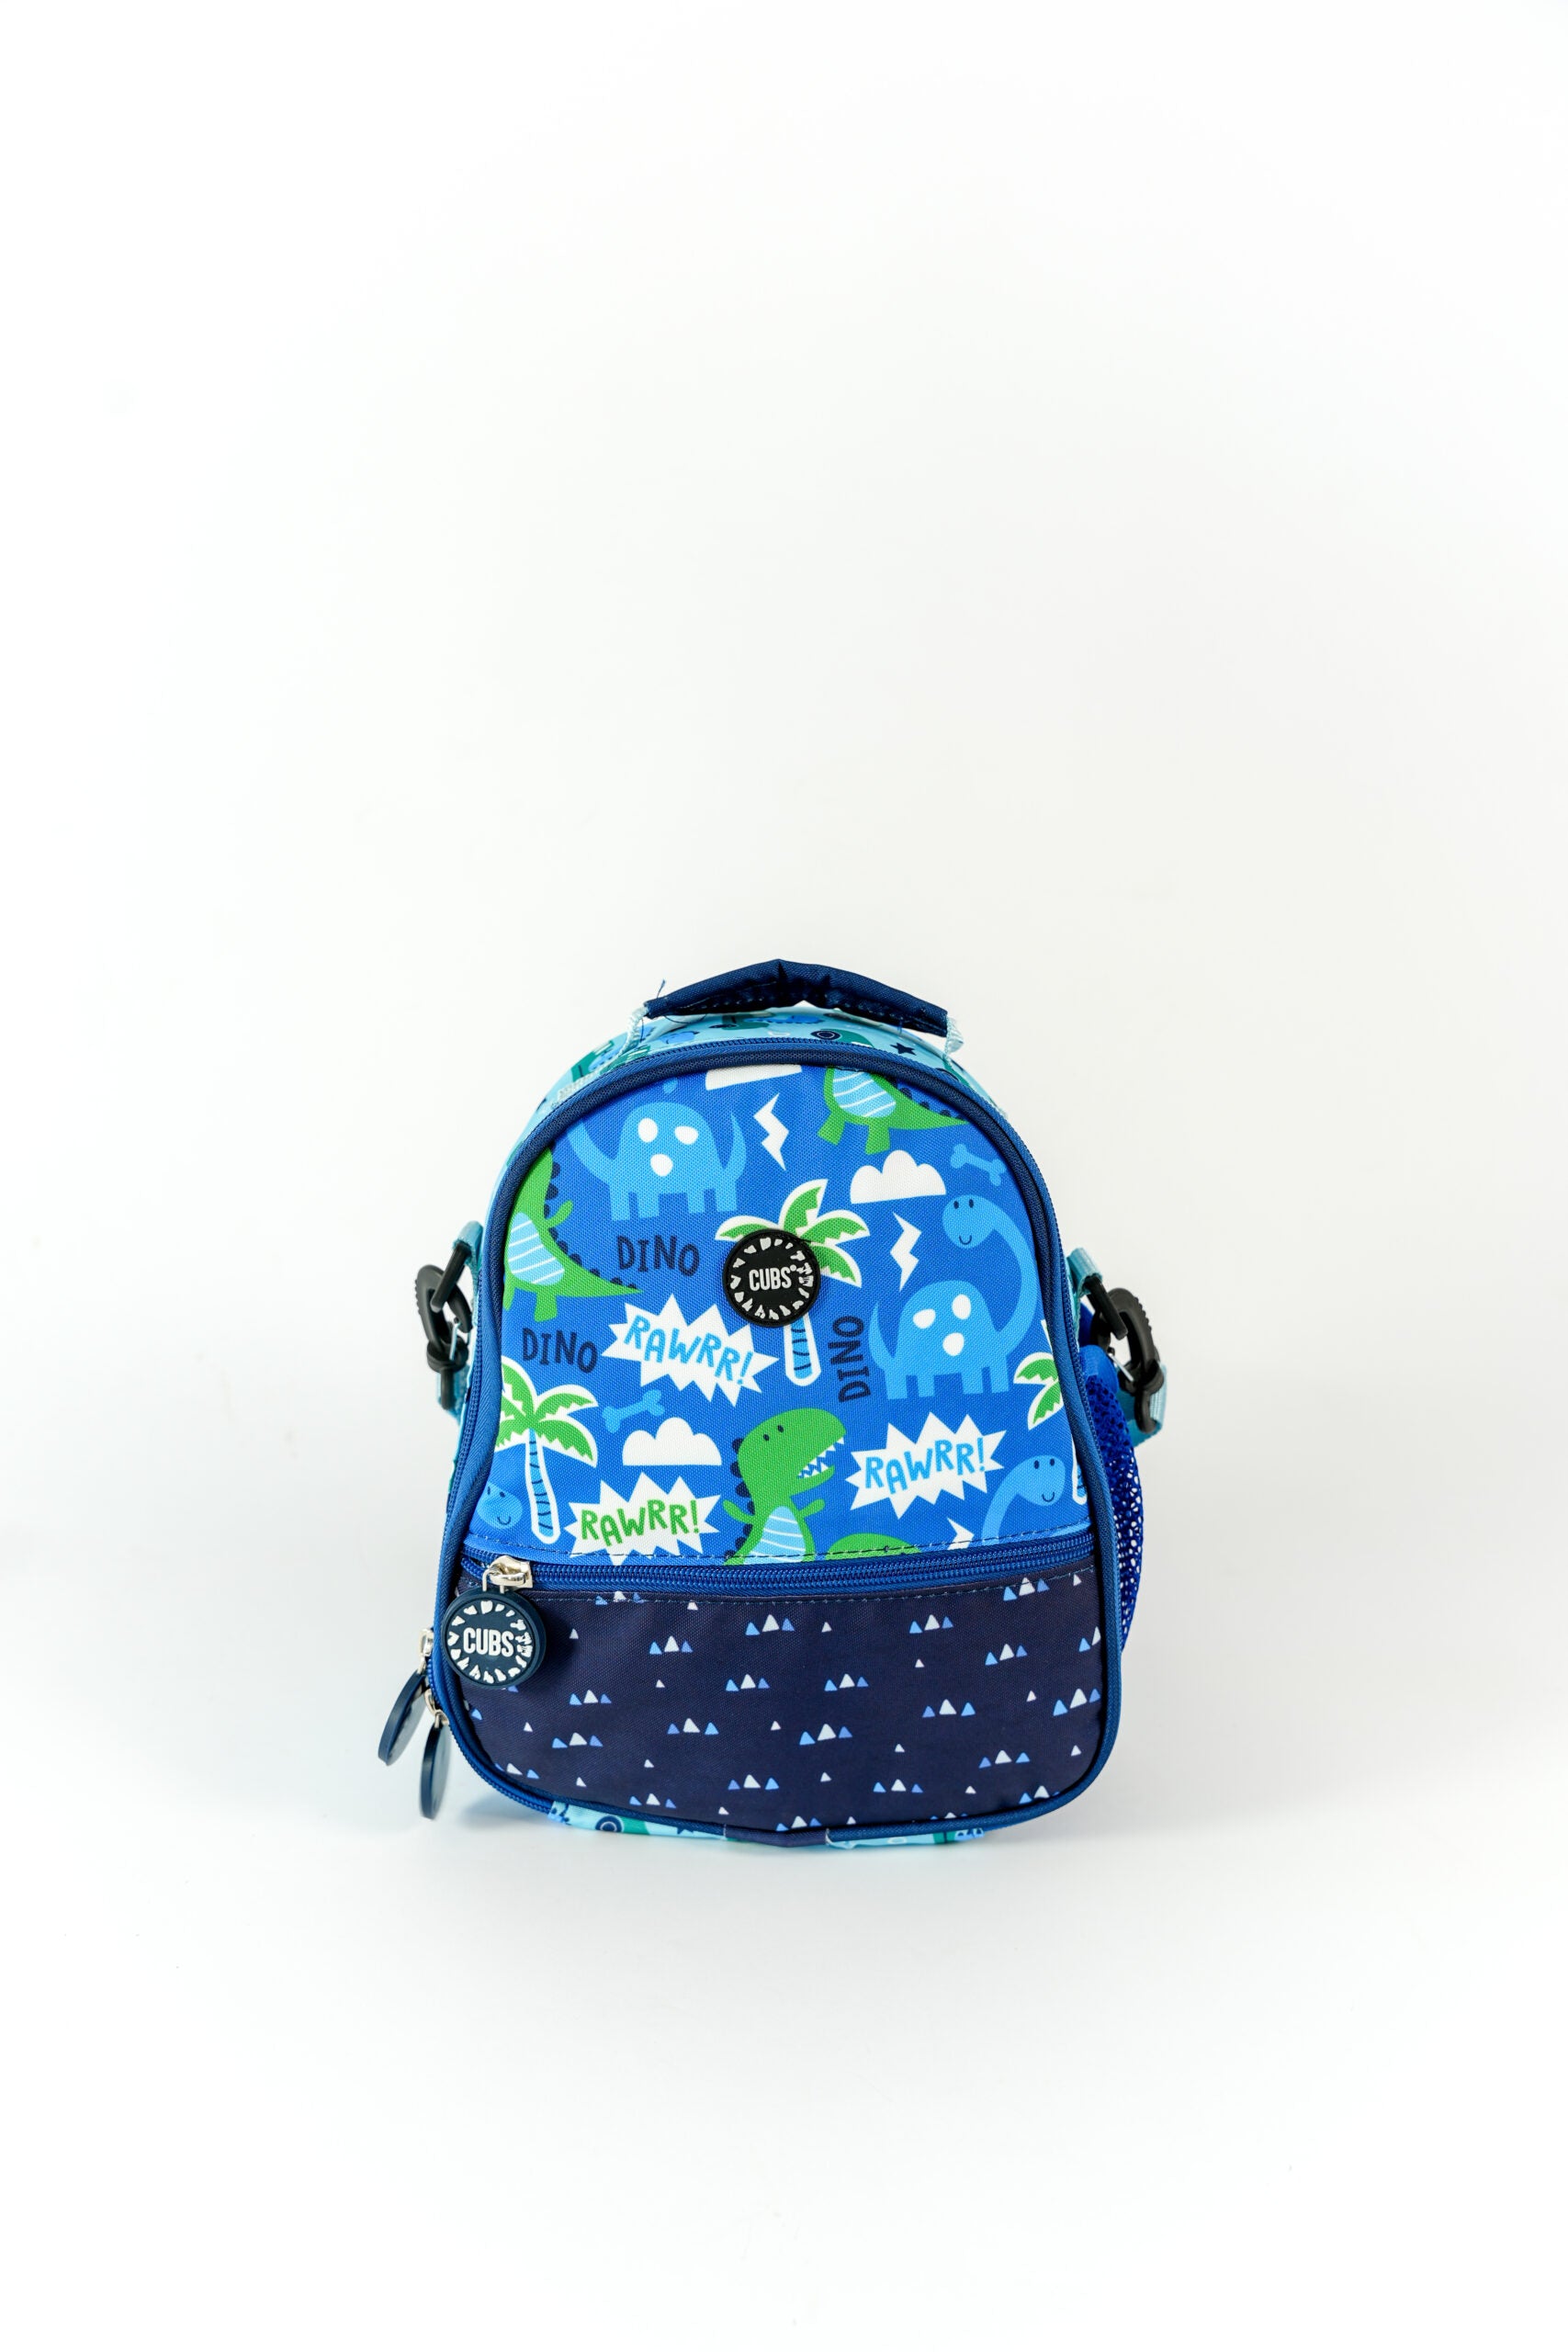 Blue Dino Pre-School Lunch bag